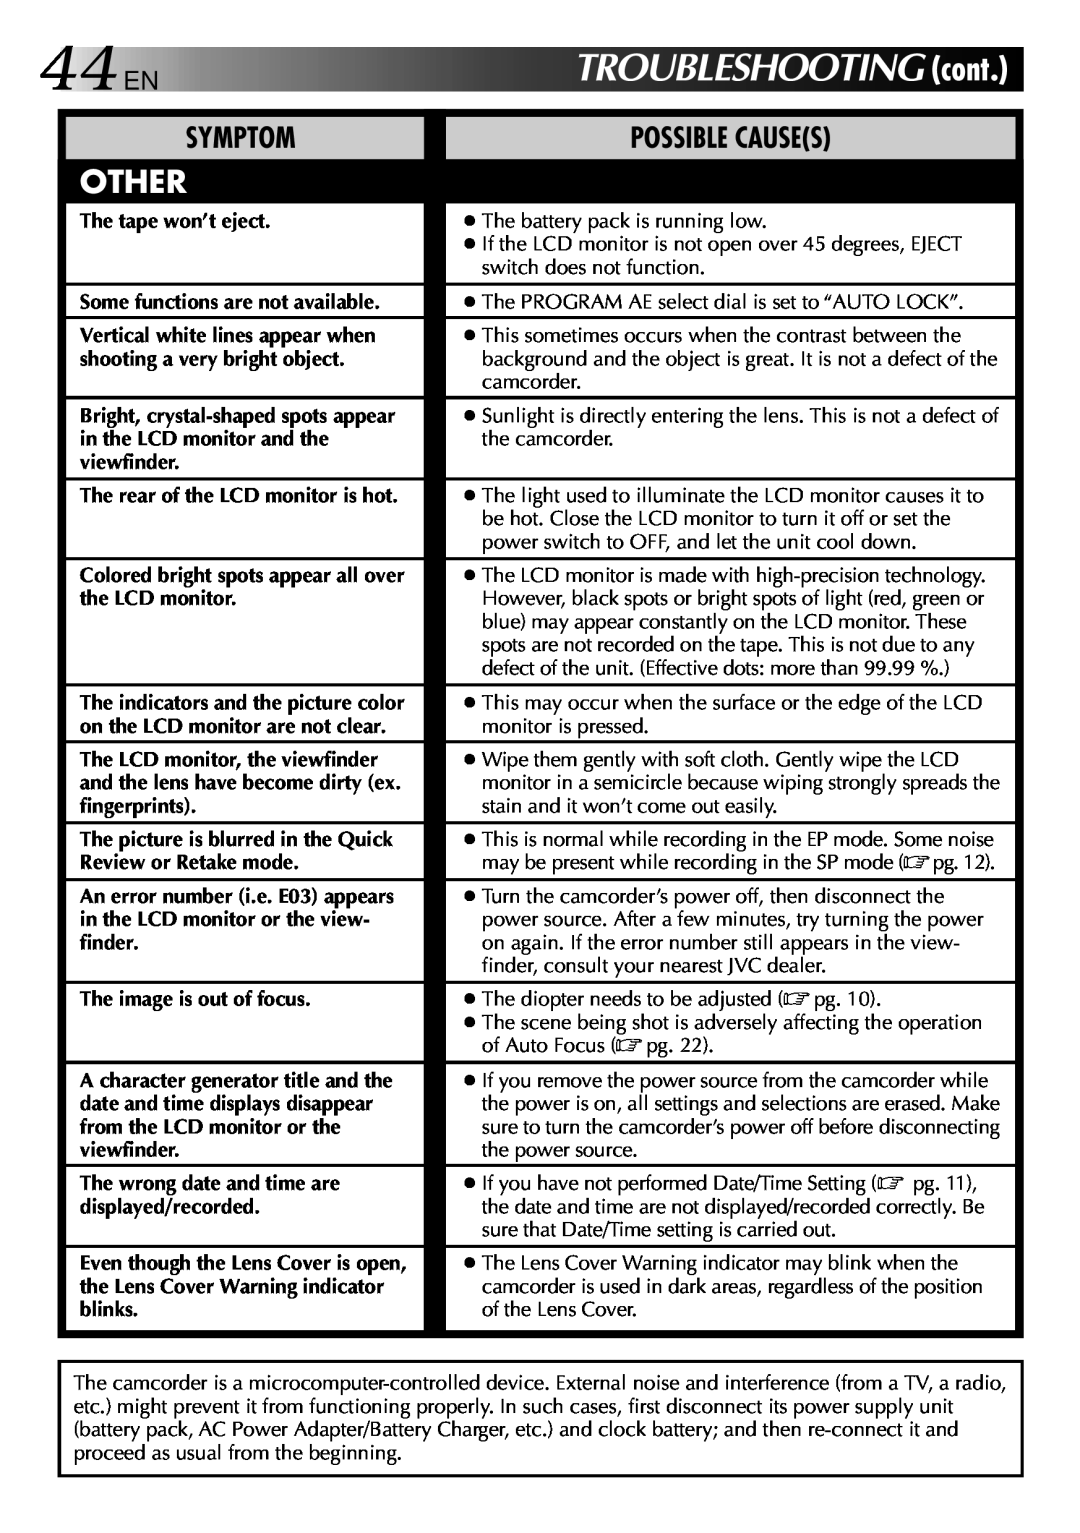 JVC GR-AXM70 manual Other, Symptom, Possible Causes 